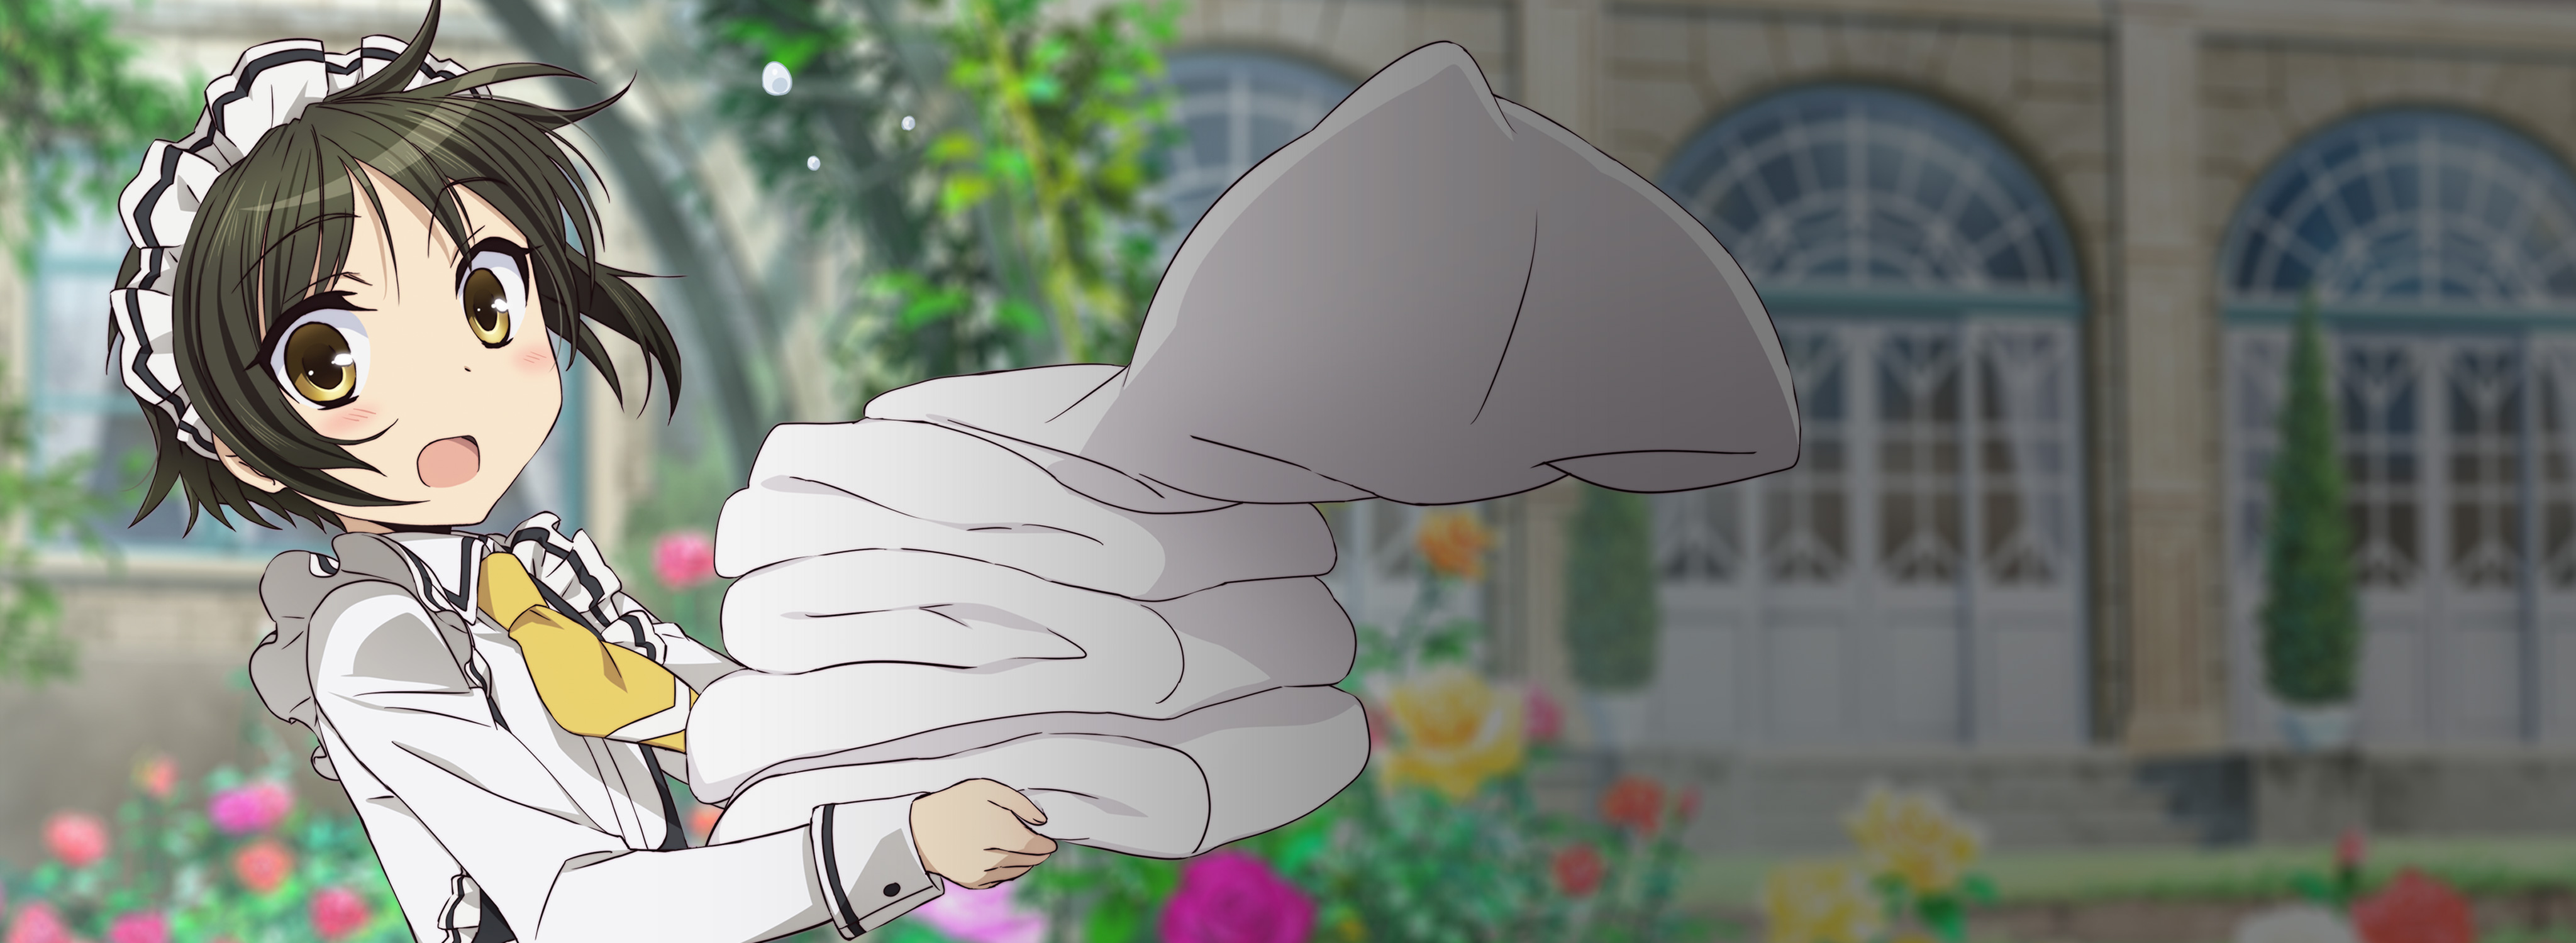 Shonen Maid HD Wallpaper Background Image